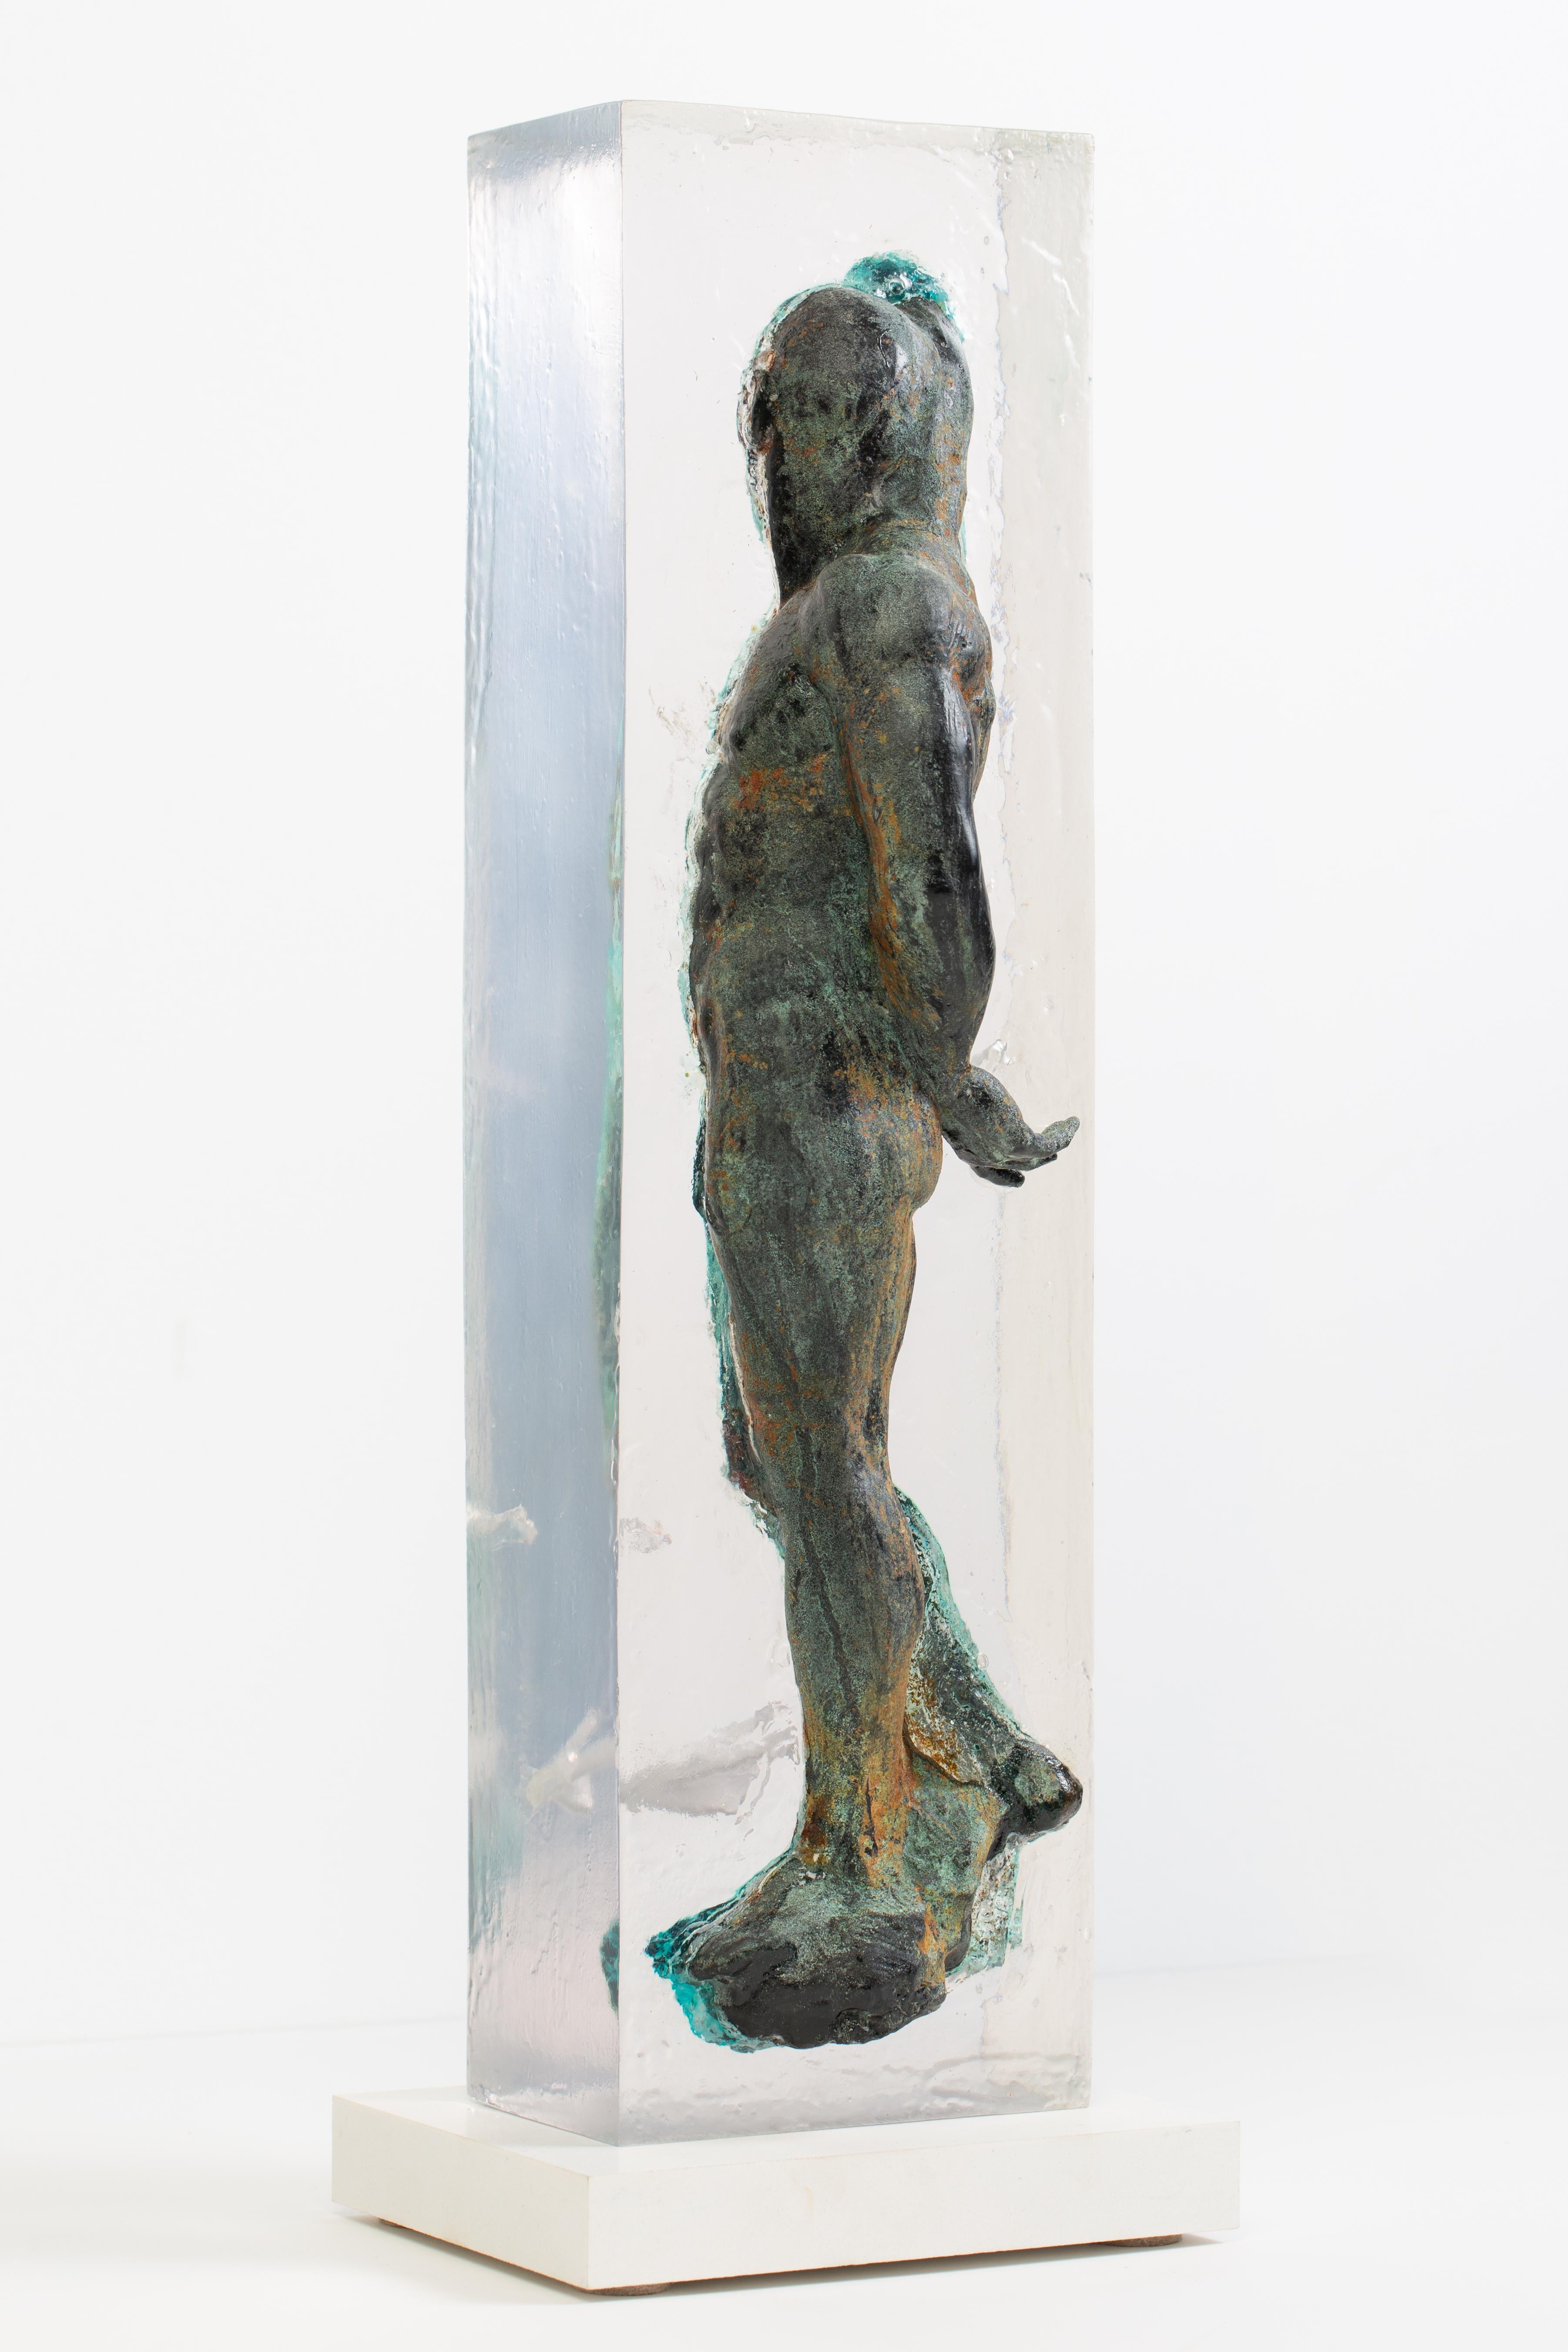 Embedded Slave - After Michelangelo, Sculpture Half Embedded in Clear Resin 1